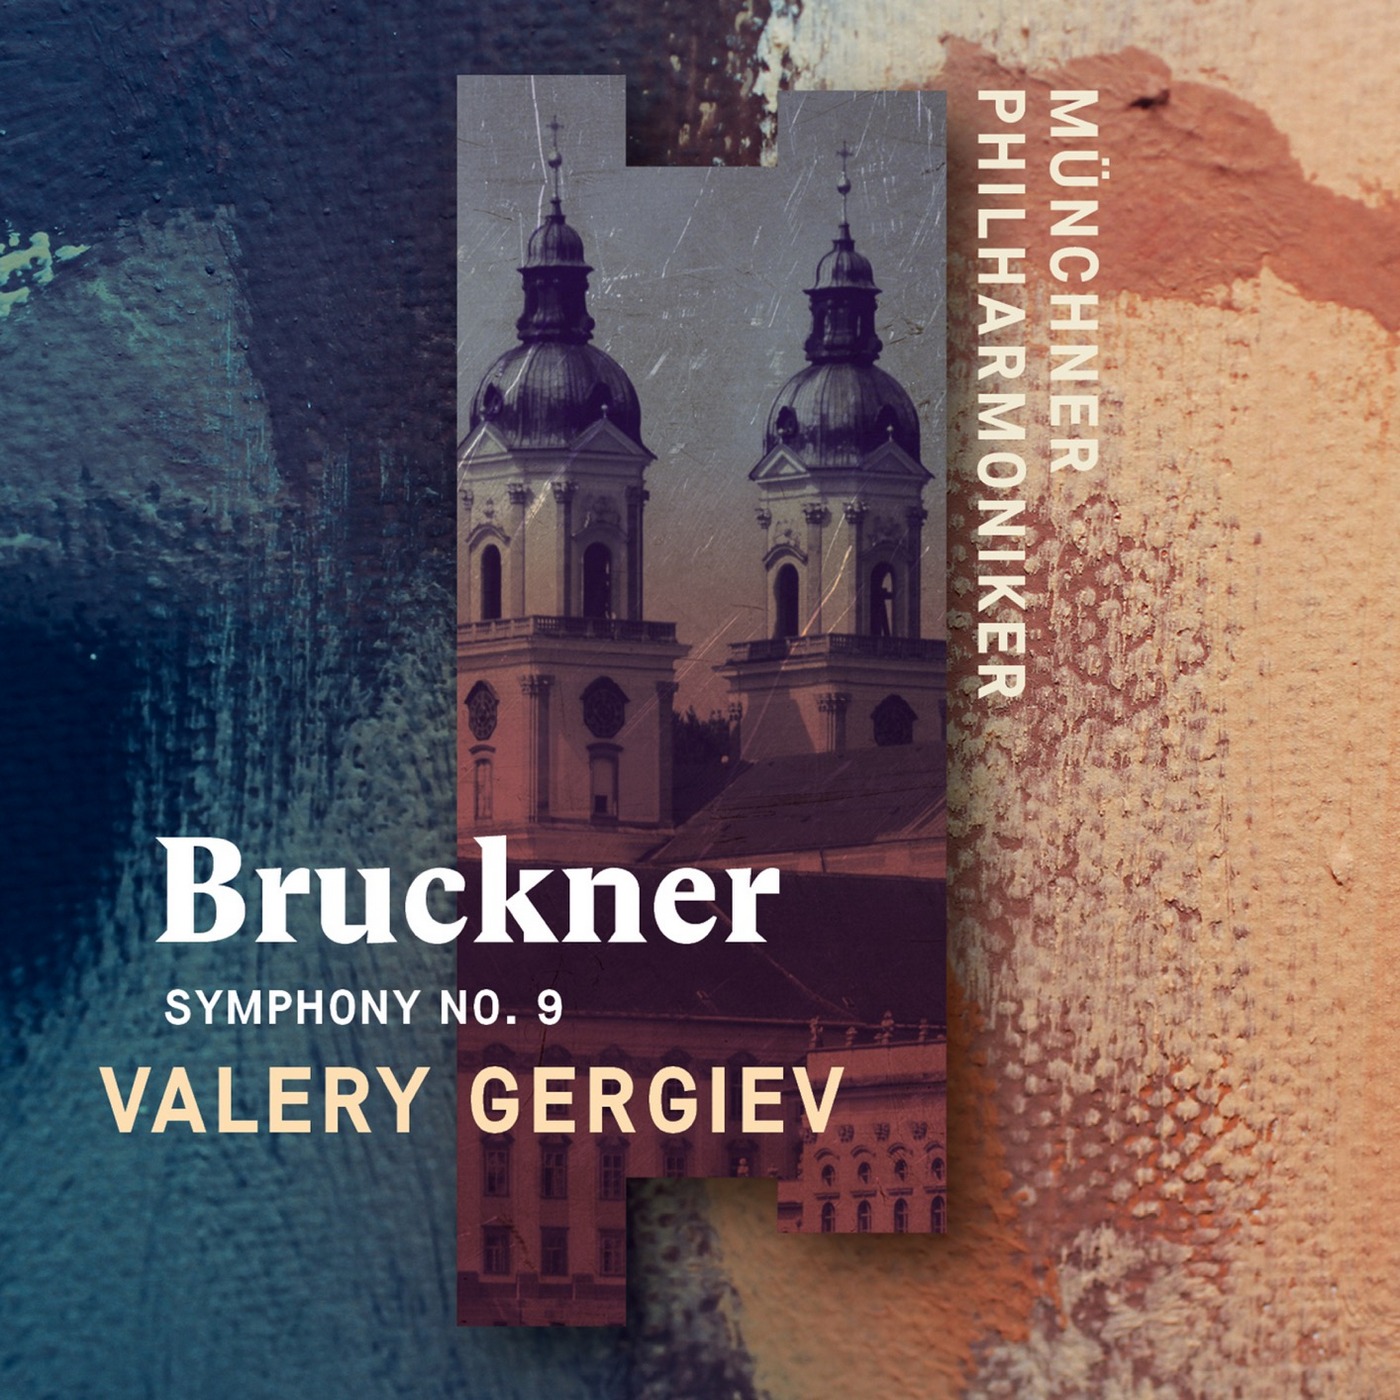 Munchner Philharmoniker & Valery Gergiev - Bruckner: Symphony No. 9 (Live) (2019) [FLAC 24bit/96kHz]